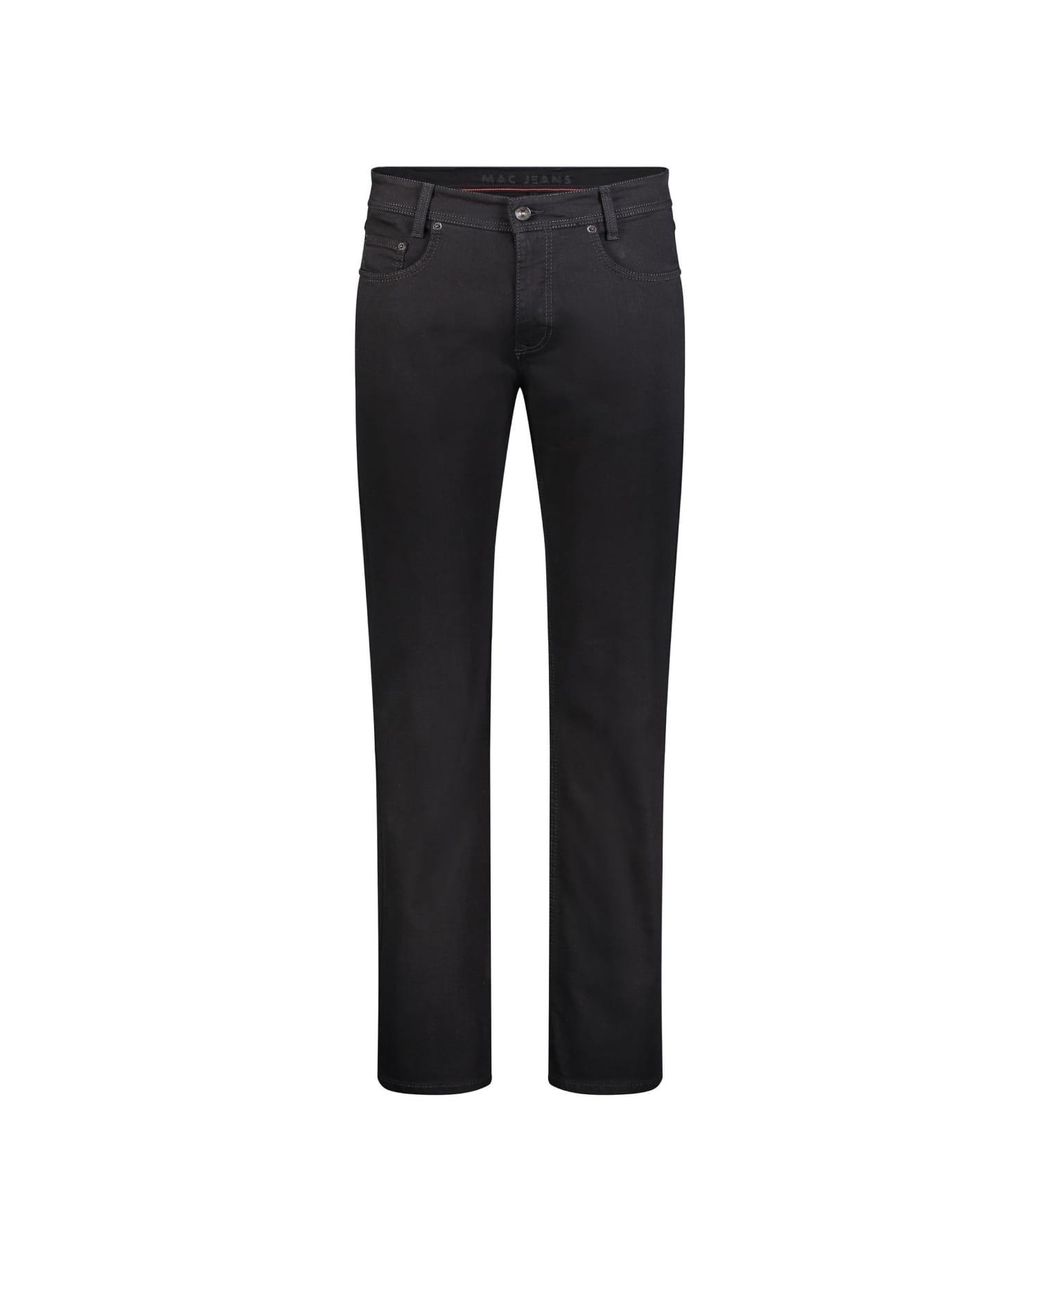 Mac Jeans Stay Black Arne Denim Jeans for Men | Lyst